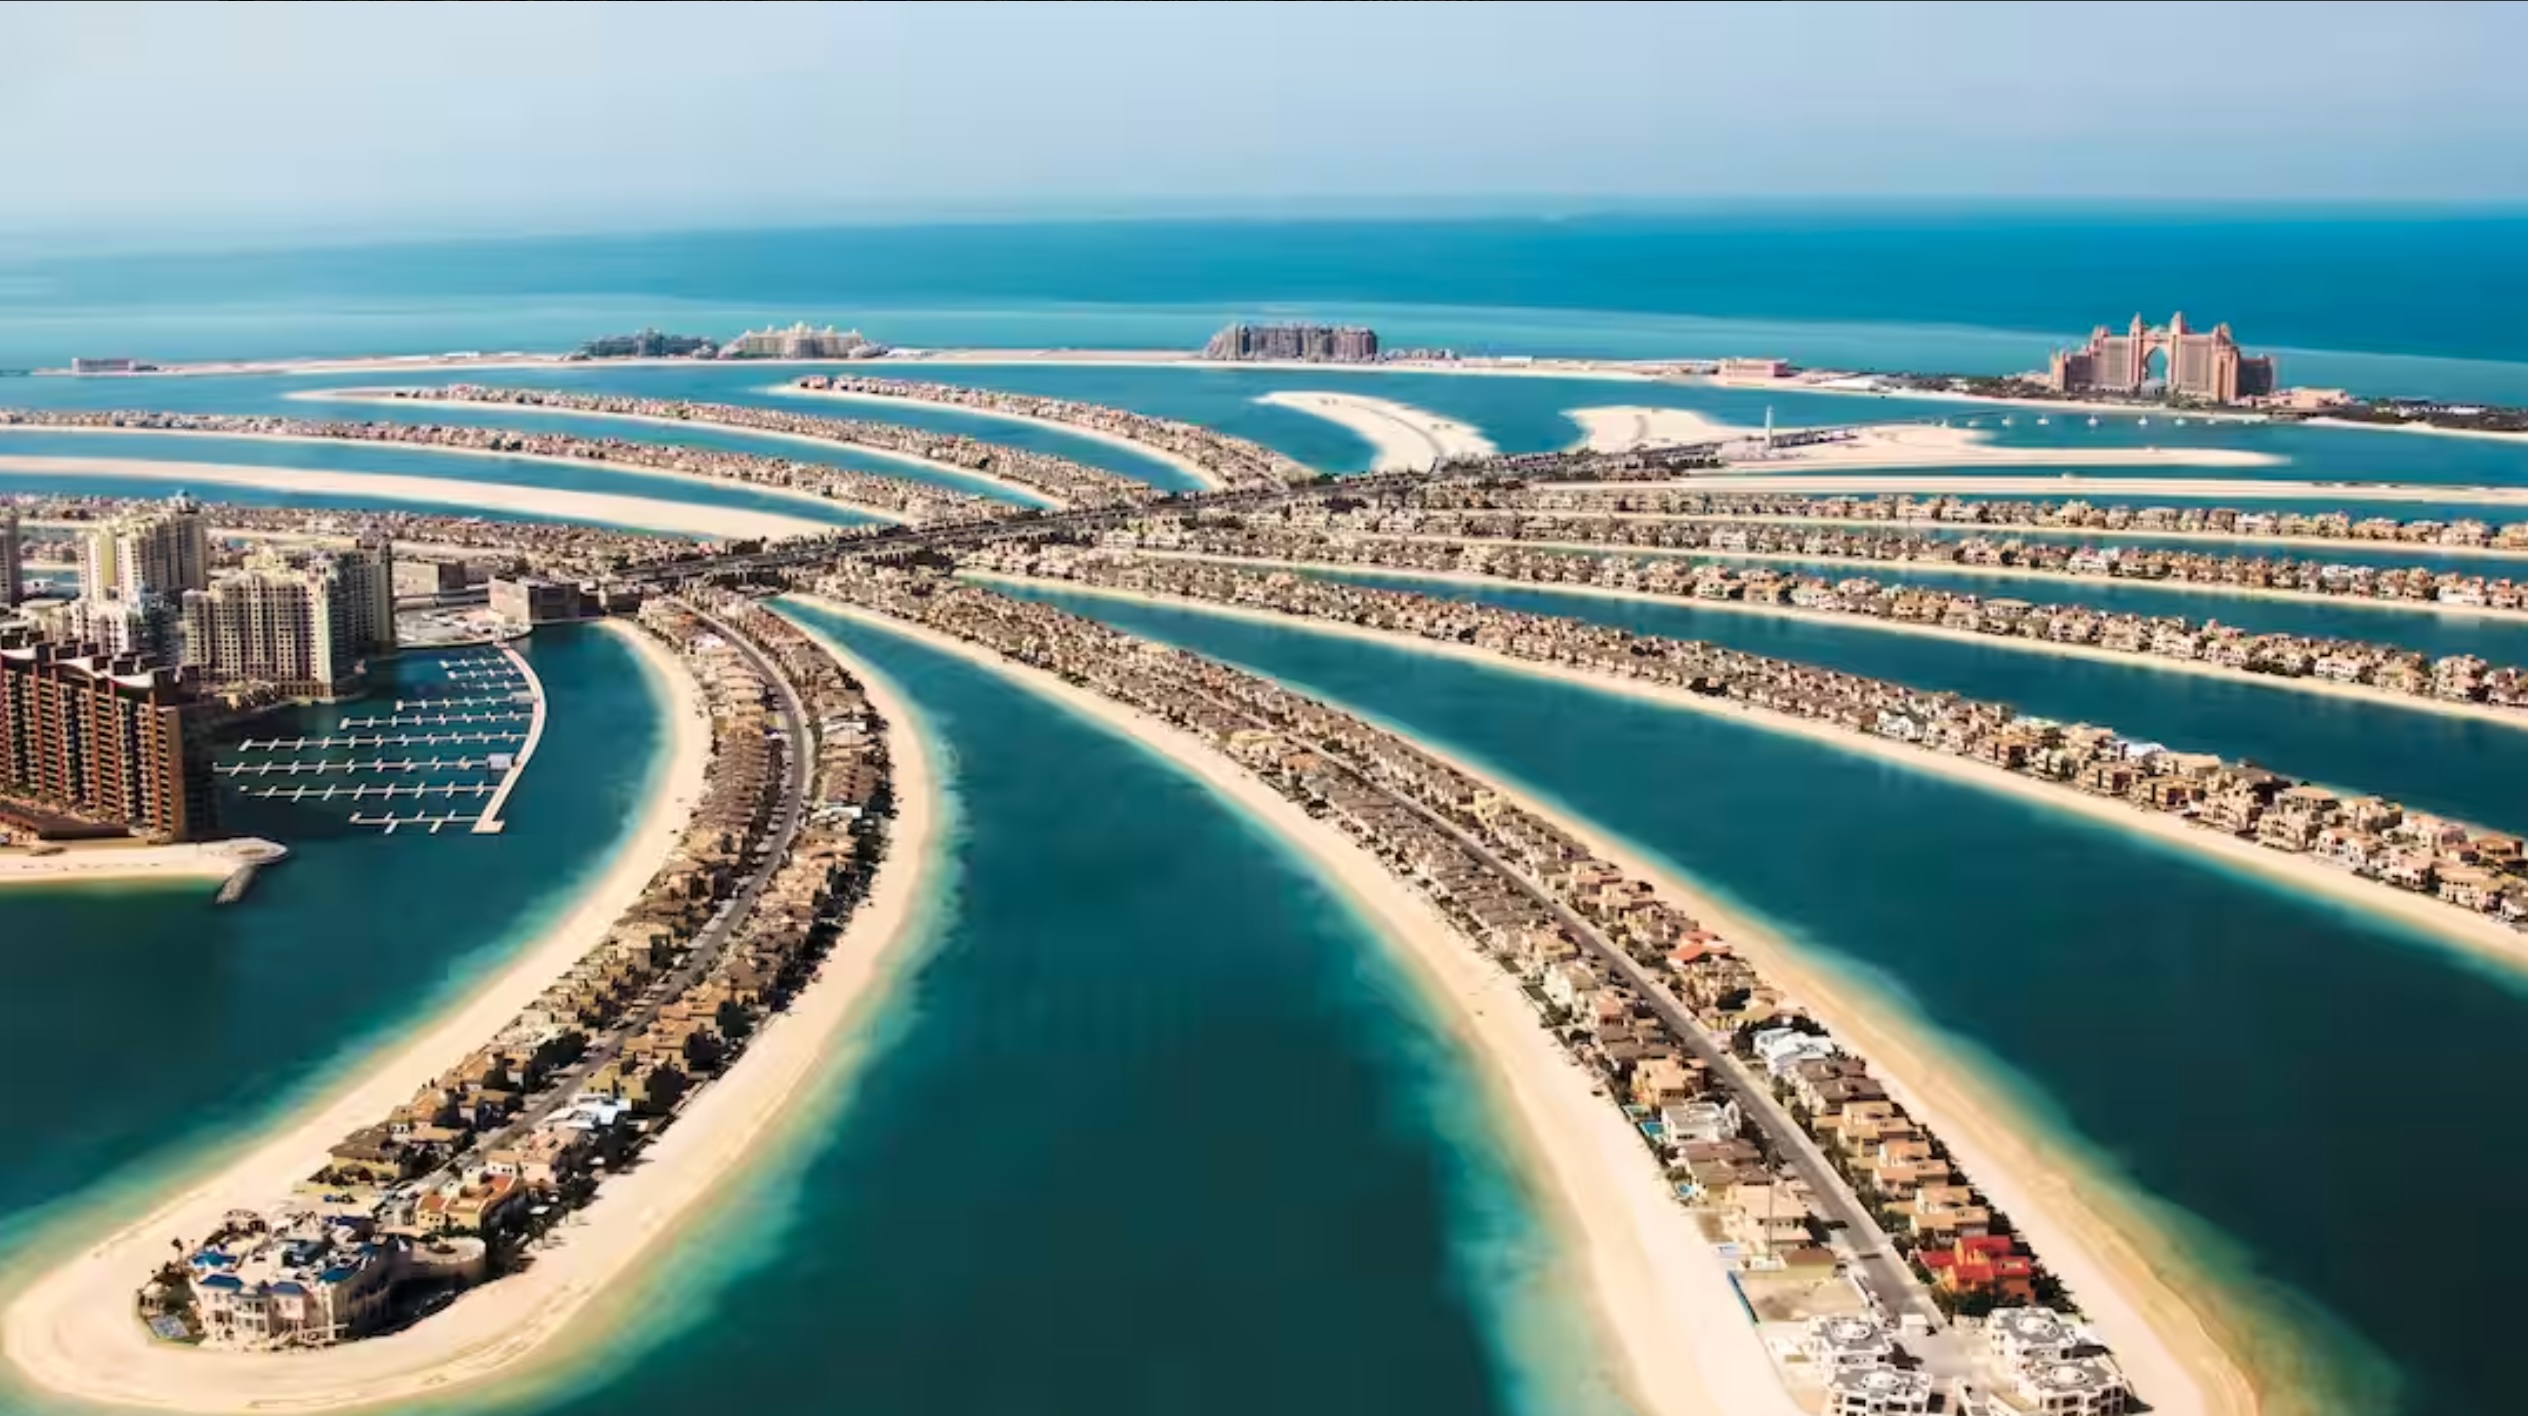 View of the iconic Palm Island, Dubai